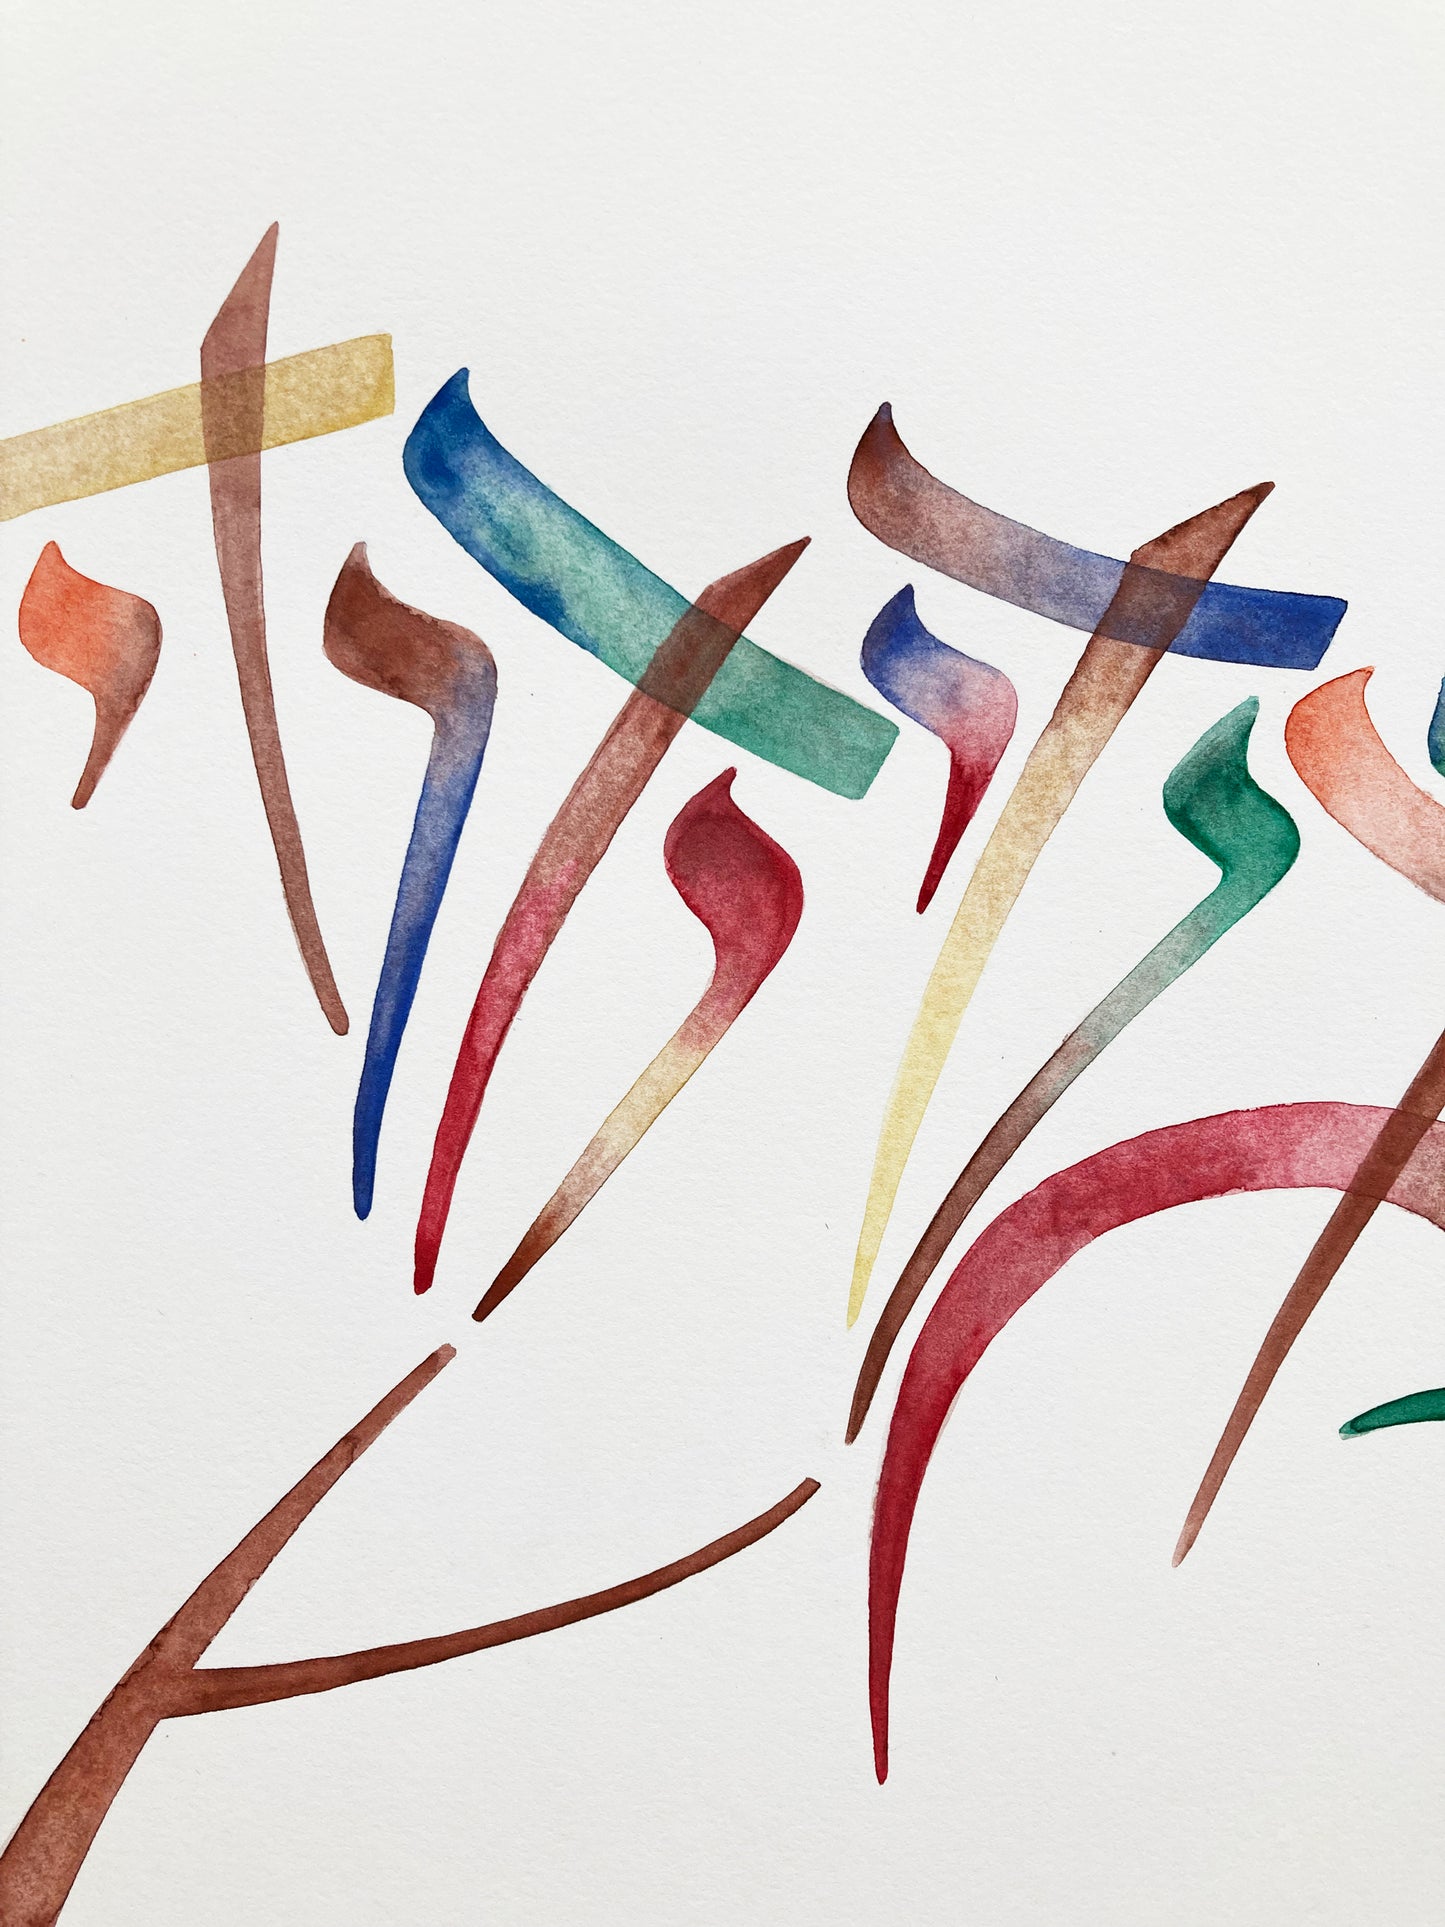 Custom Blessing Calligraphy sign, Name painting, Hebrew English Language Writing